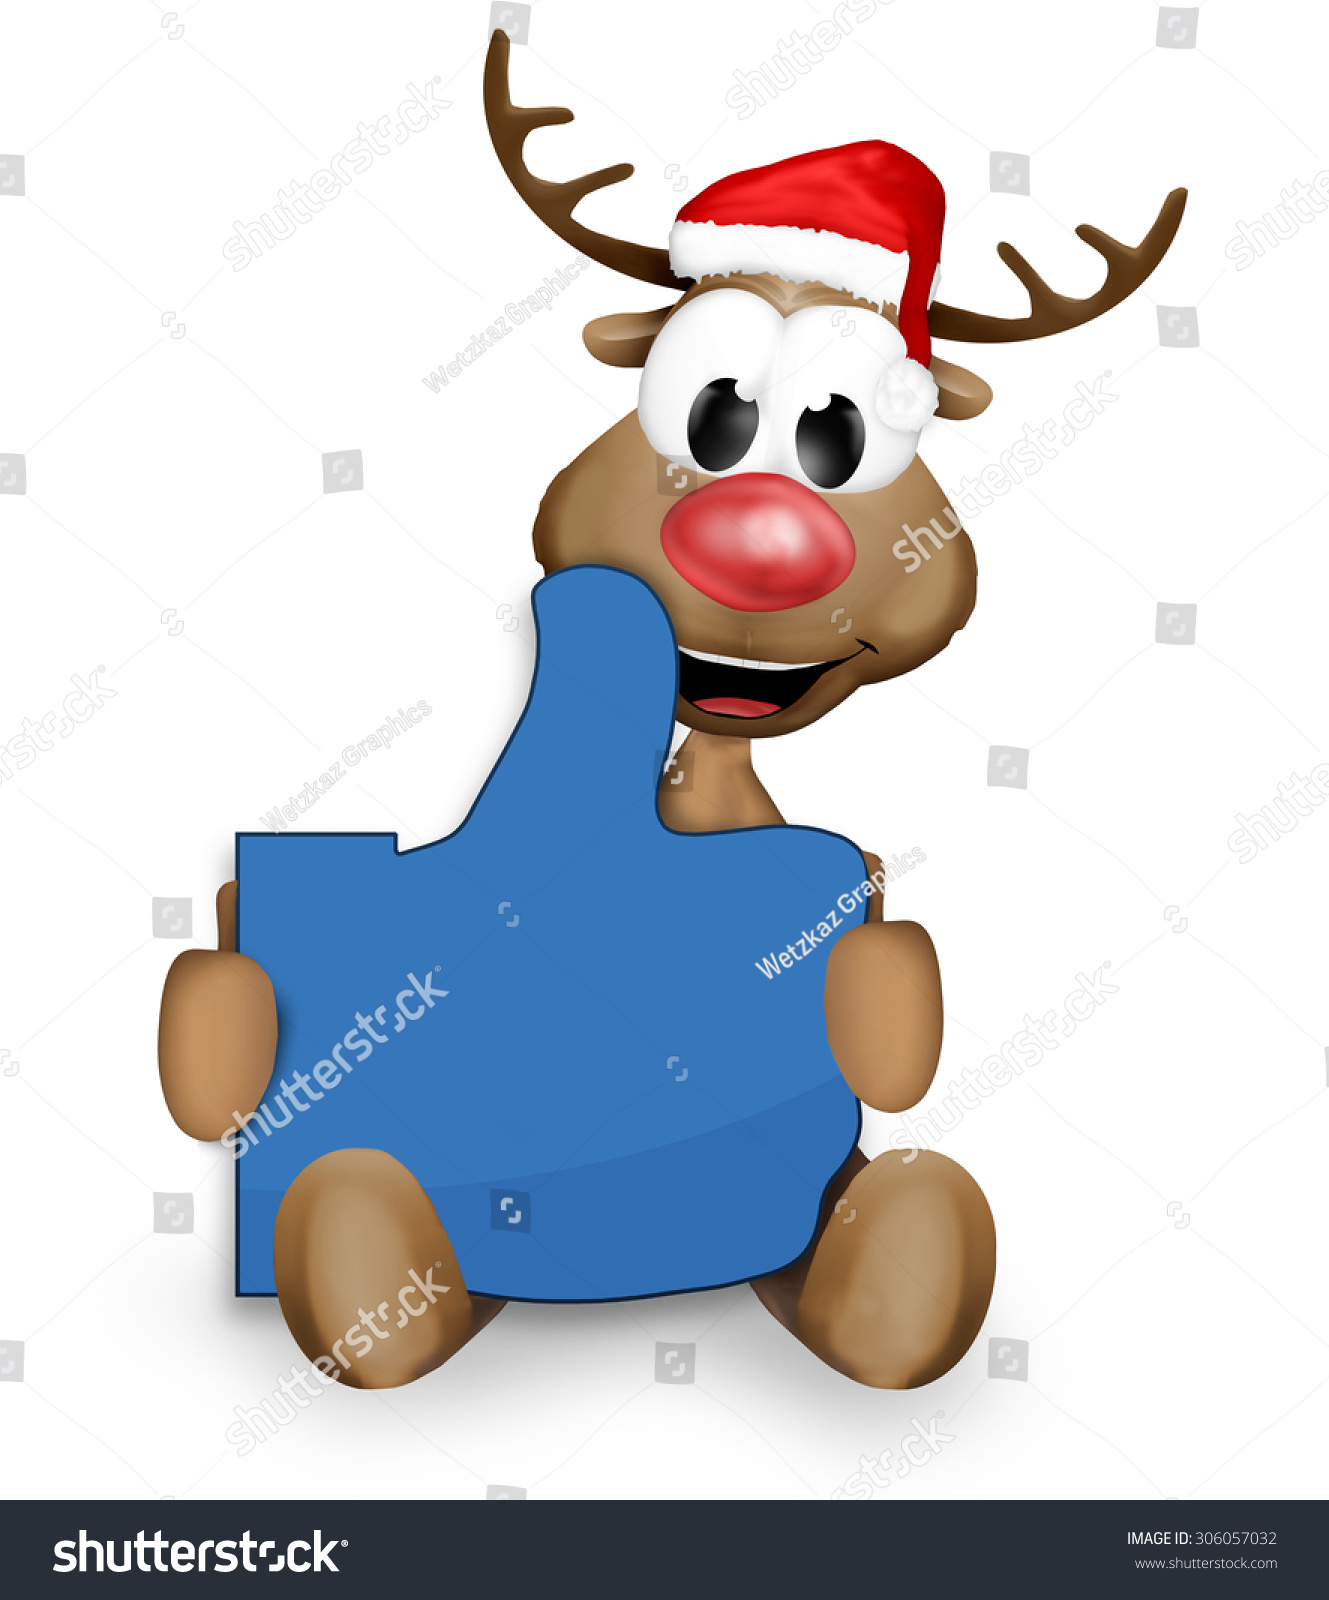 Christmas Reindeer Stock Photo 306057032 : Shutterstock